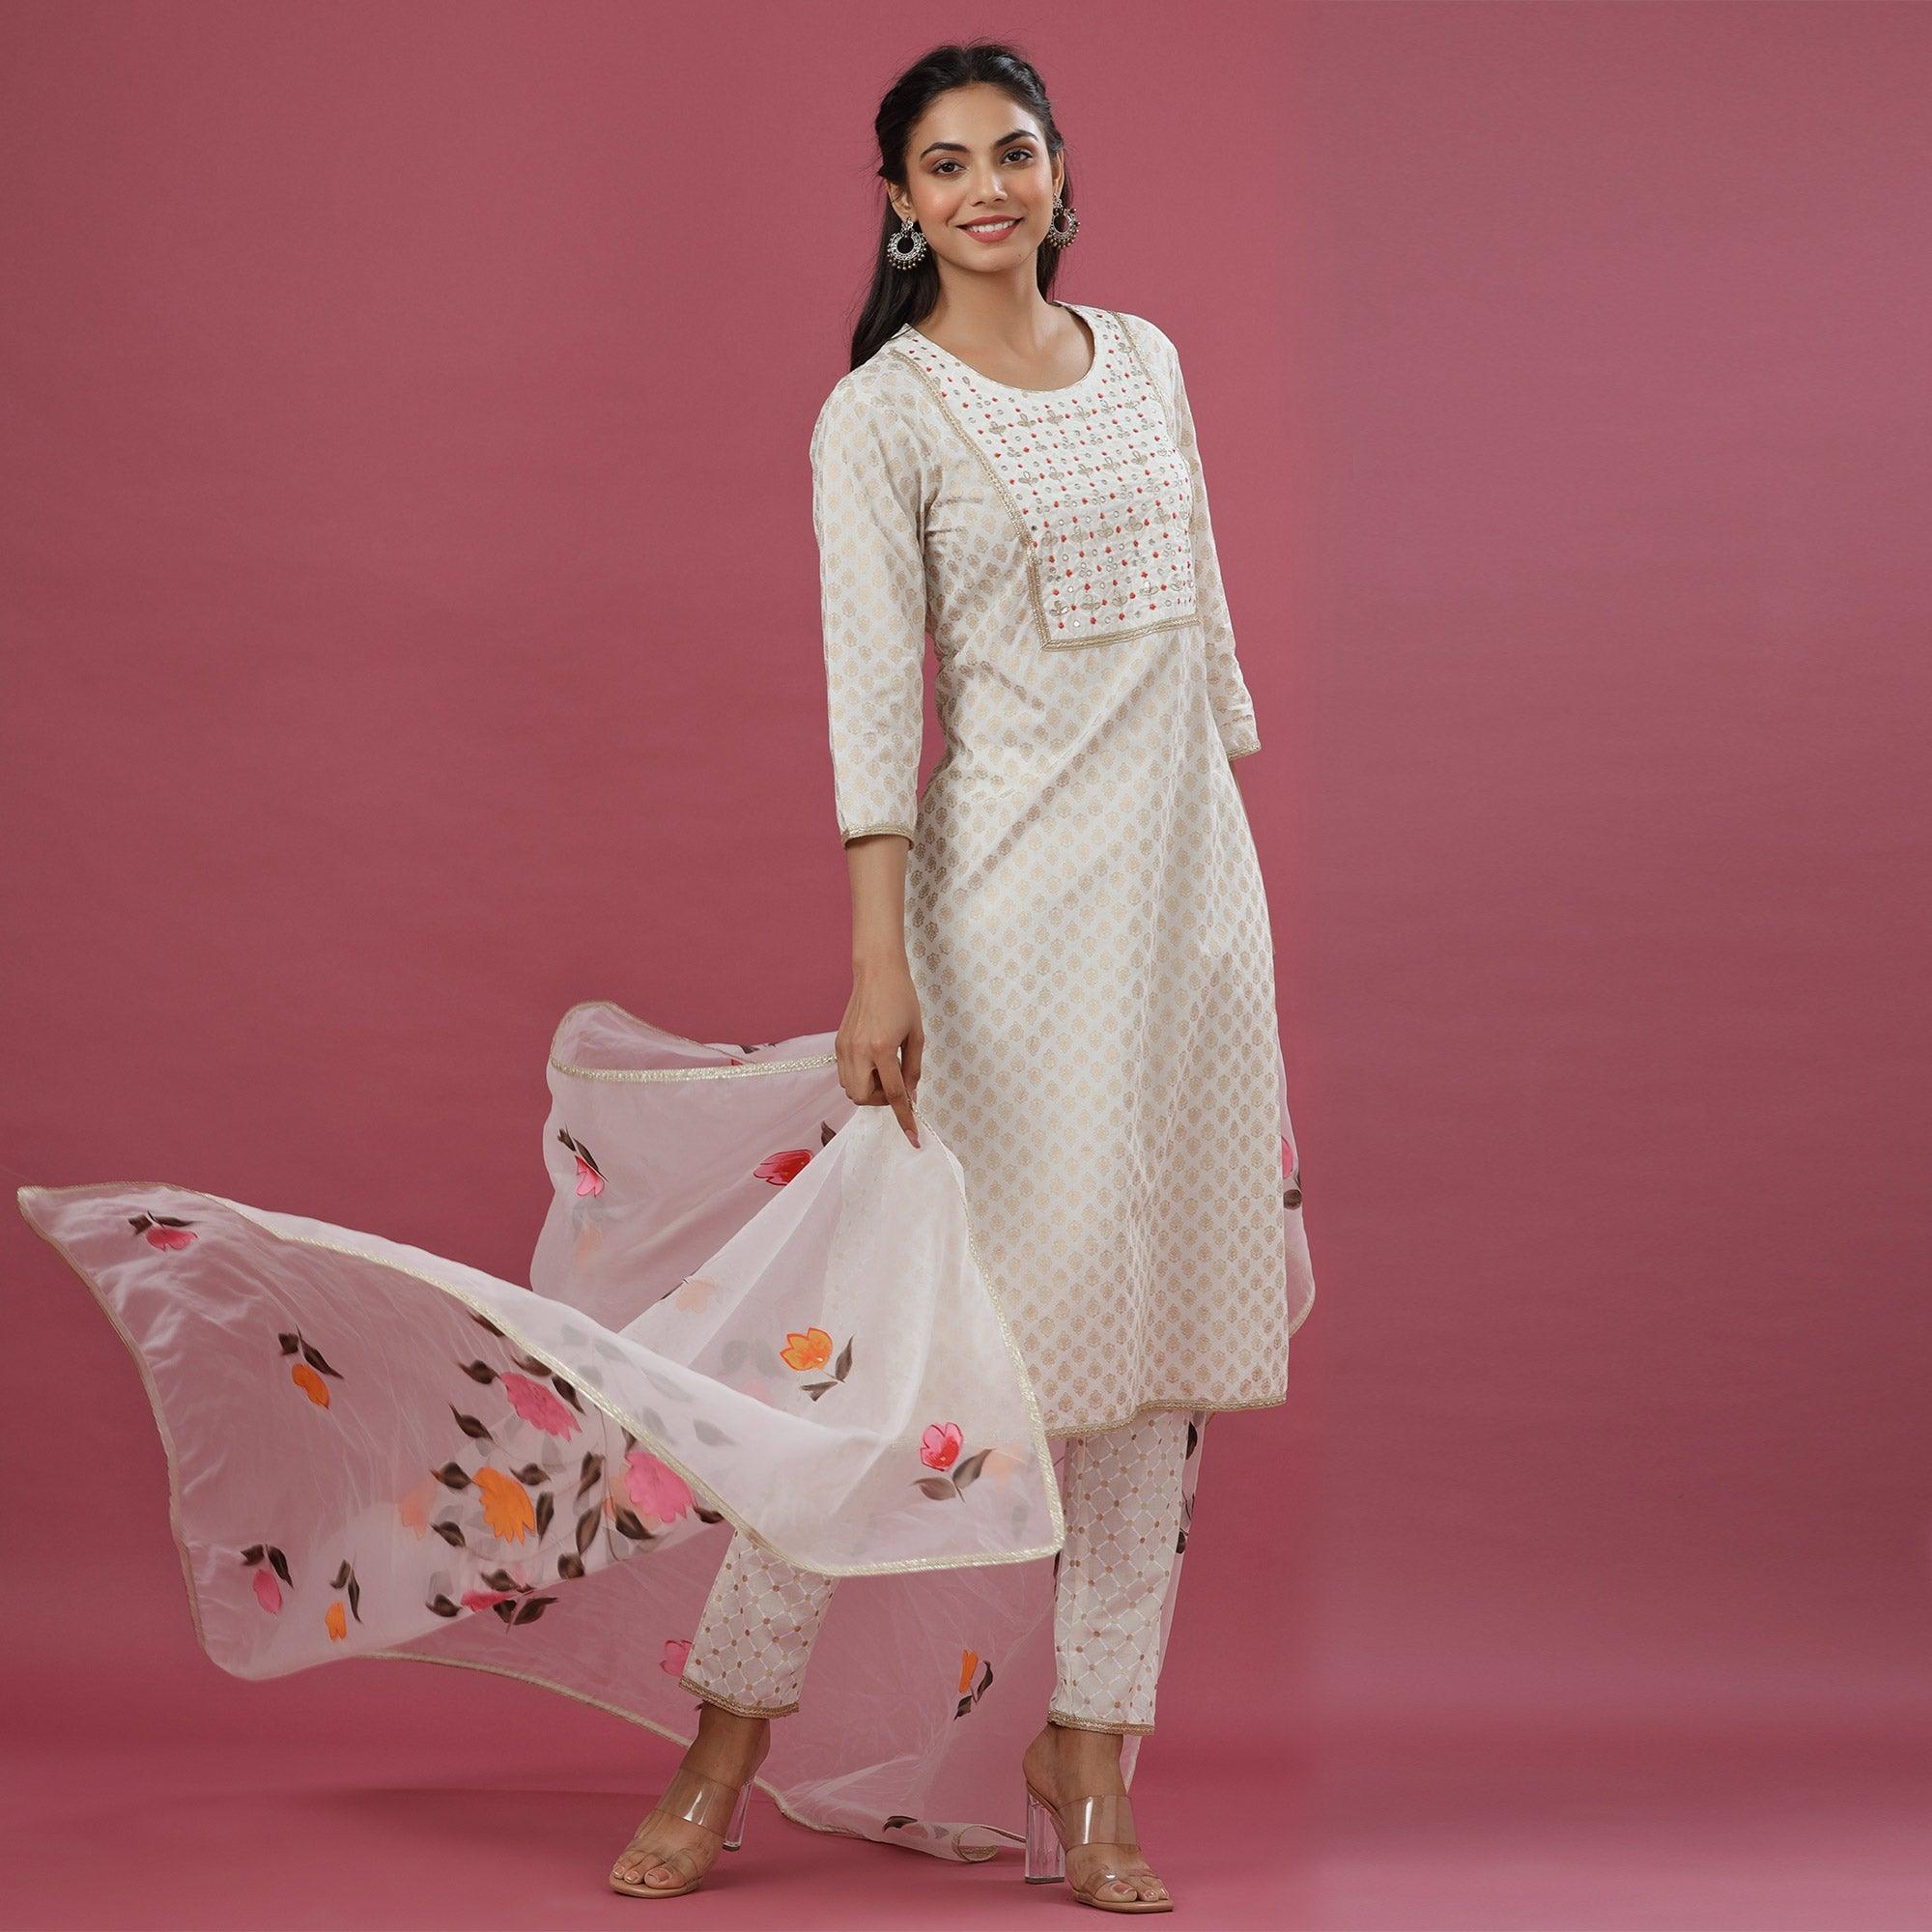 Buy Women Fashion Rajasthani Jaipuri Red Kurti with White Palazzo Pant Set  (Rayon) (Red)-XL at Amazon.in